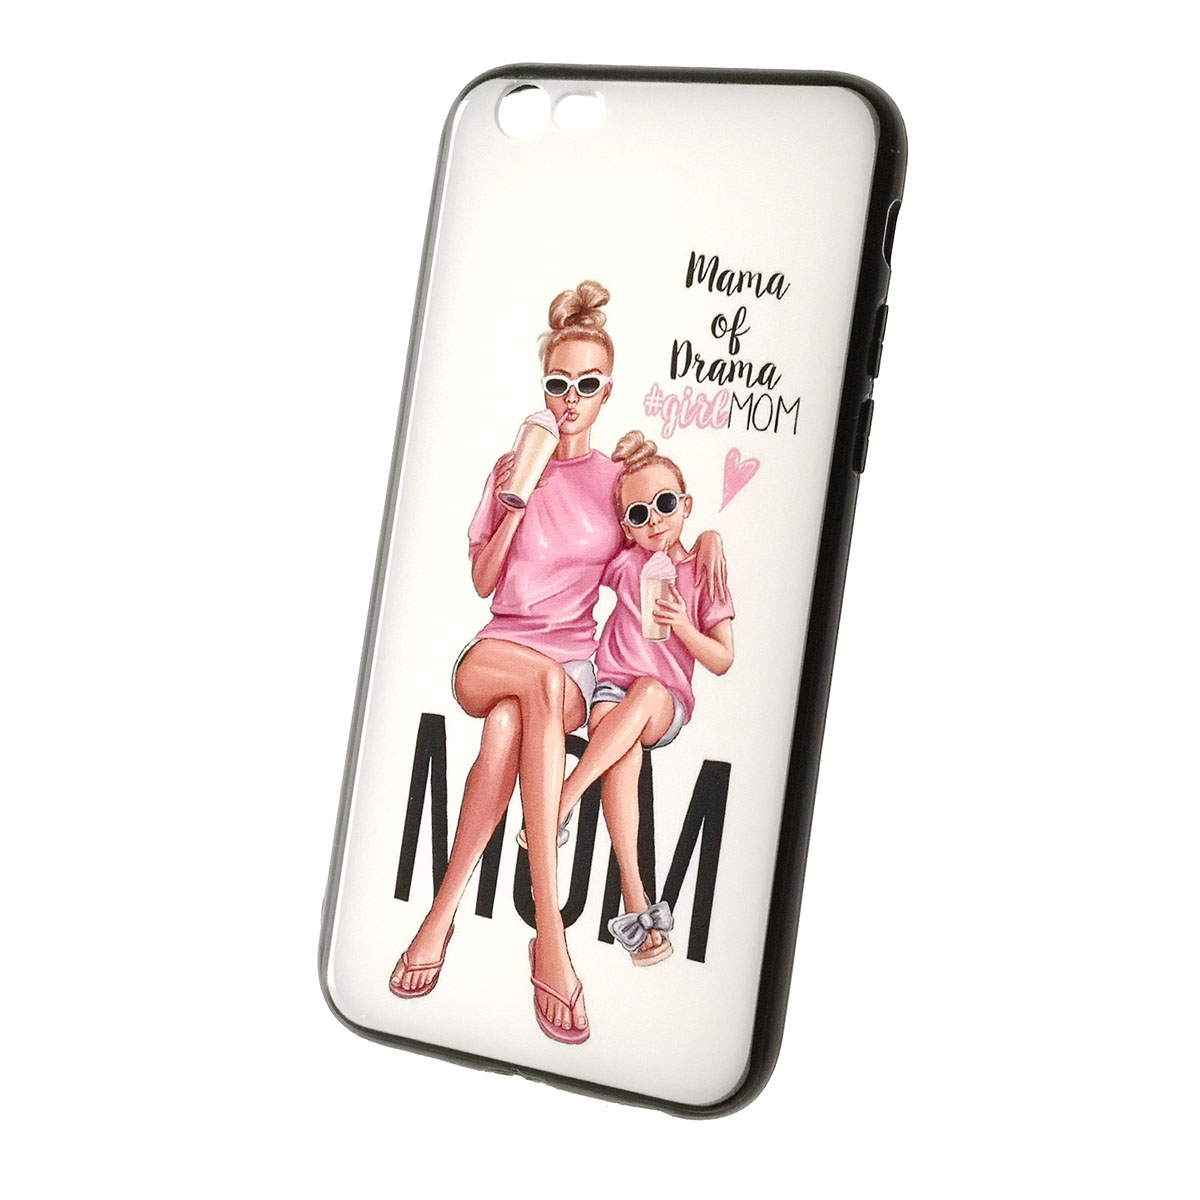 Чехол накладка для APPLE iPhone 6, 6G, 6S, силикон, рисунок Mama of Drama girlMOM.